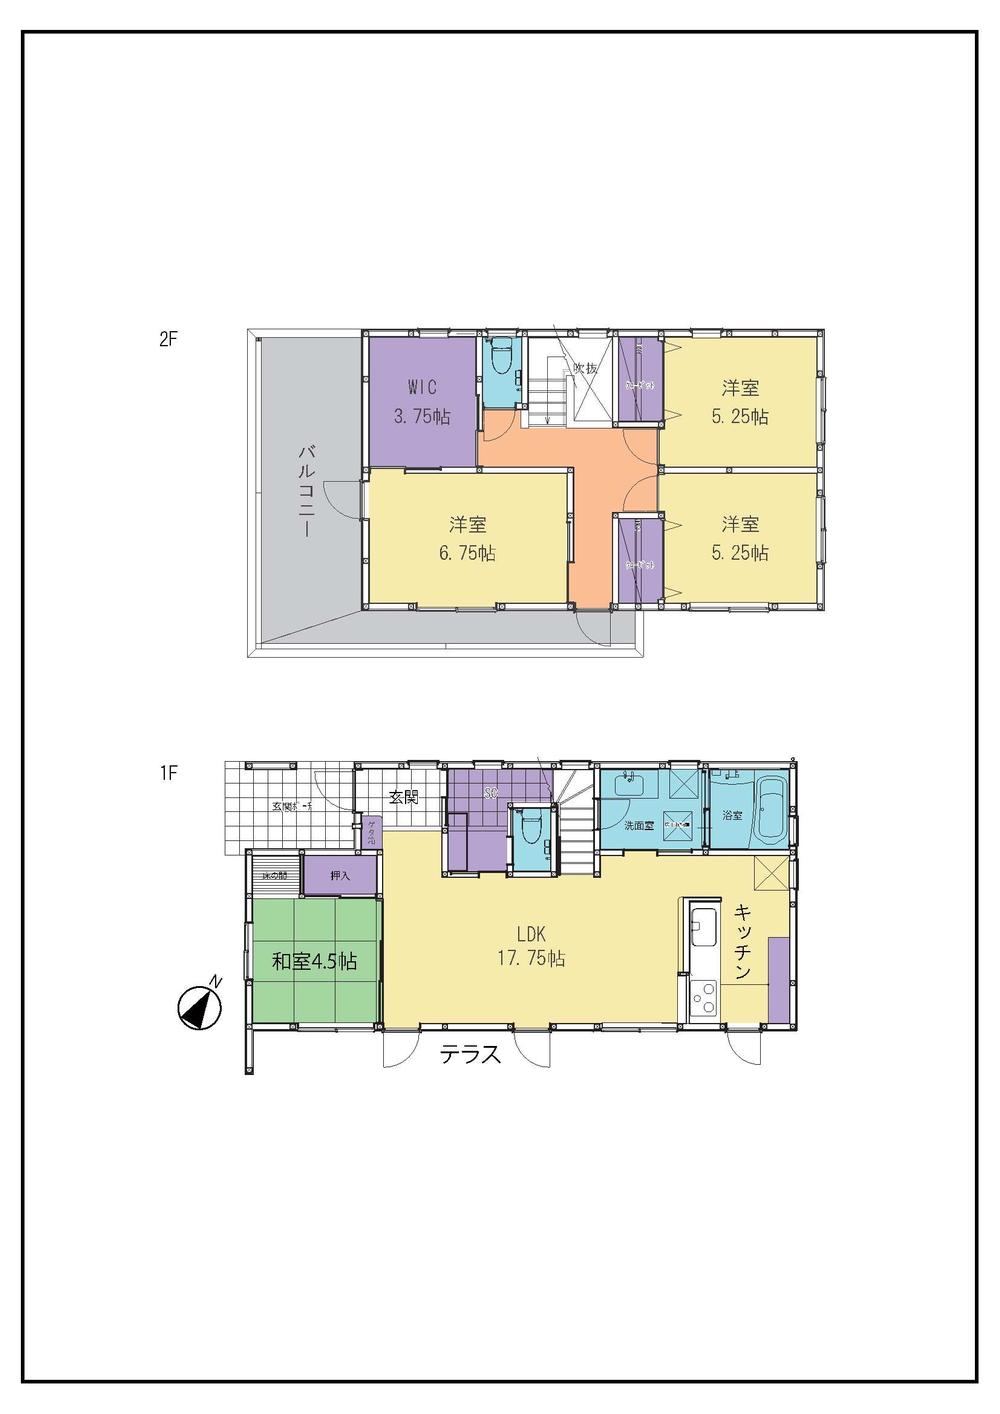 Floor plan. 27,900,000 yen, 4LDK, Land area 165.34 sq m , Building area 107.64 sq m